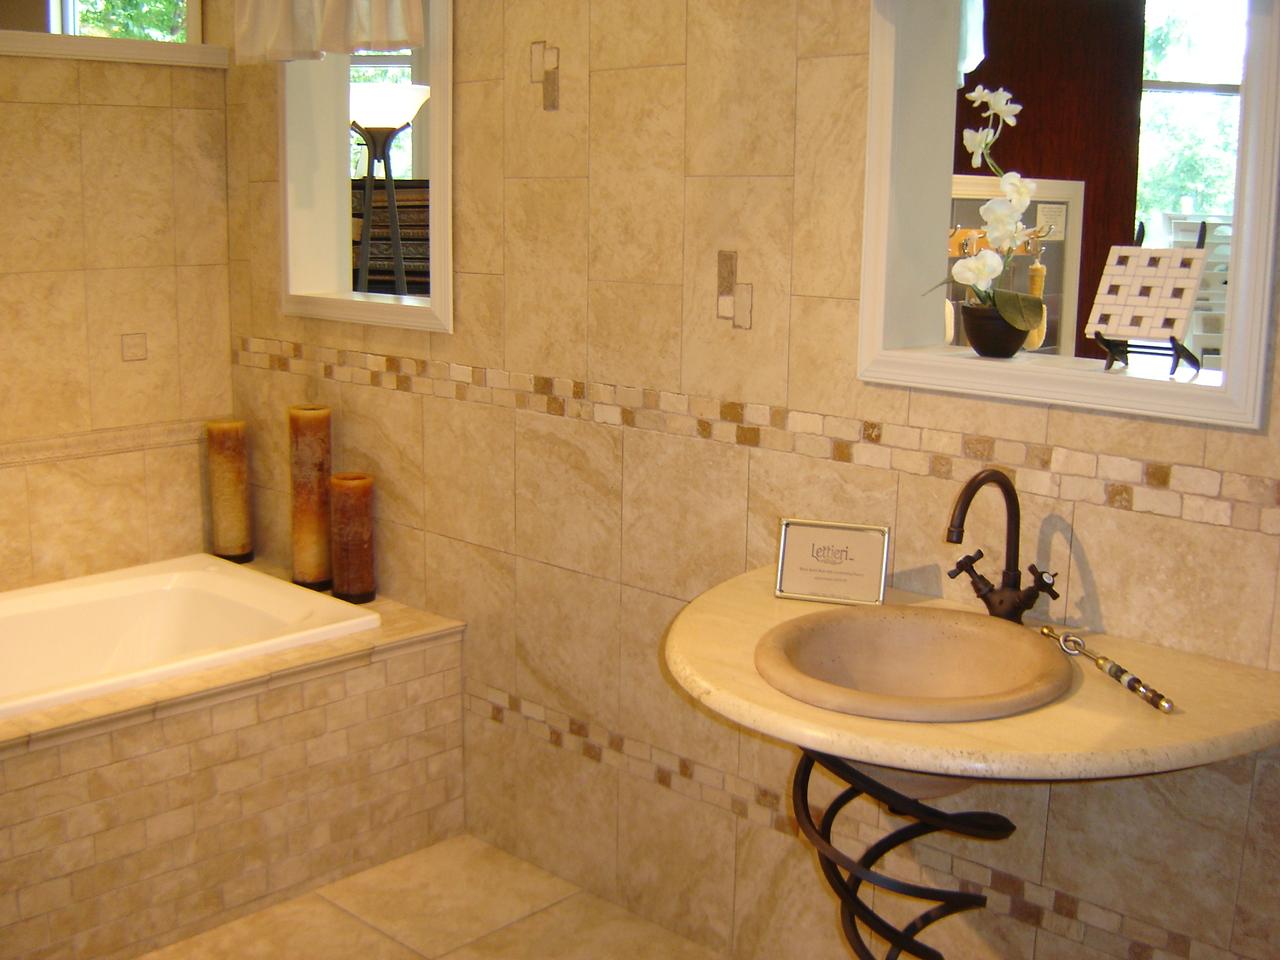 Ceramic tiles design for bathroom